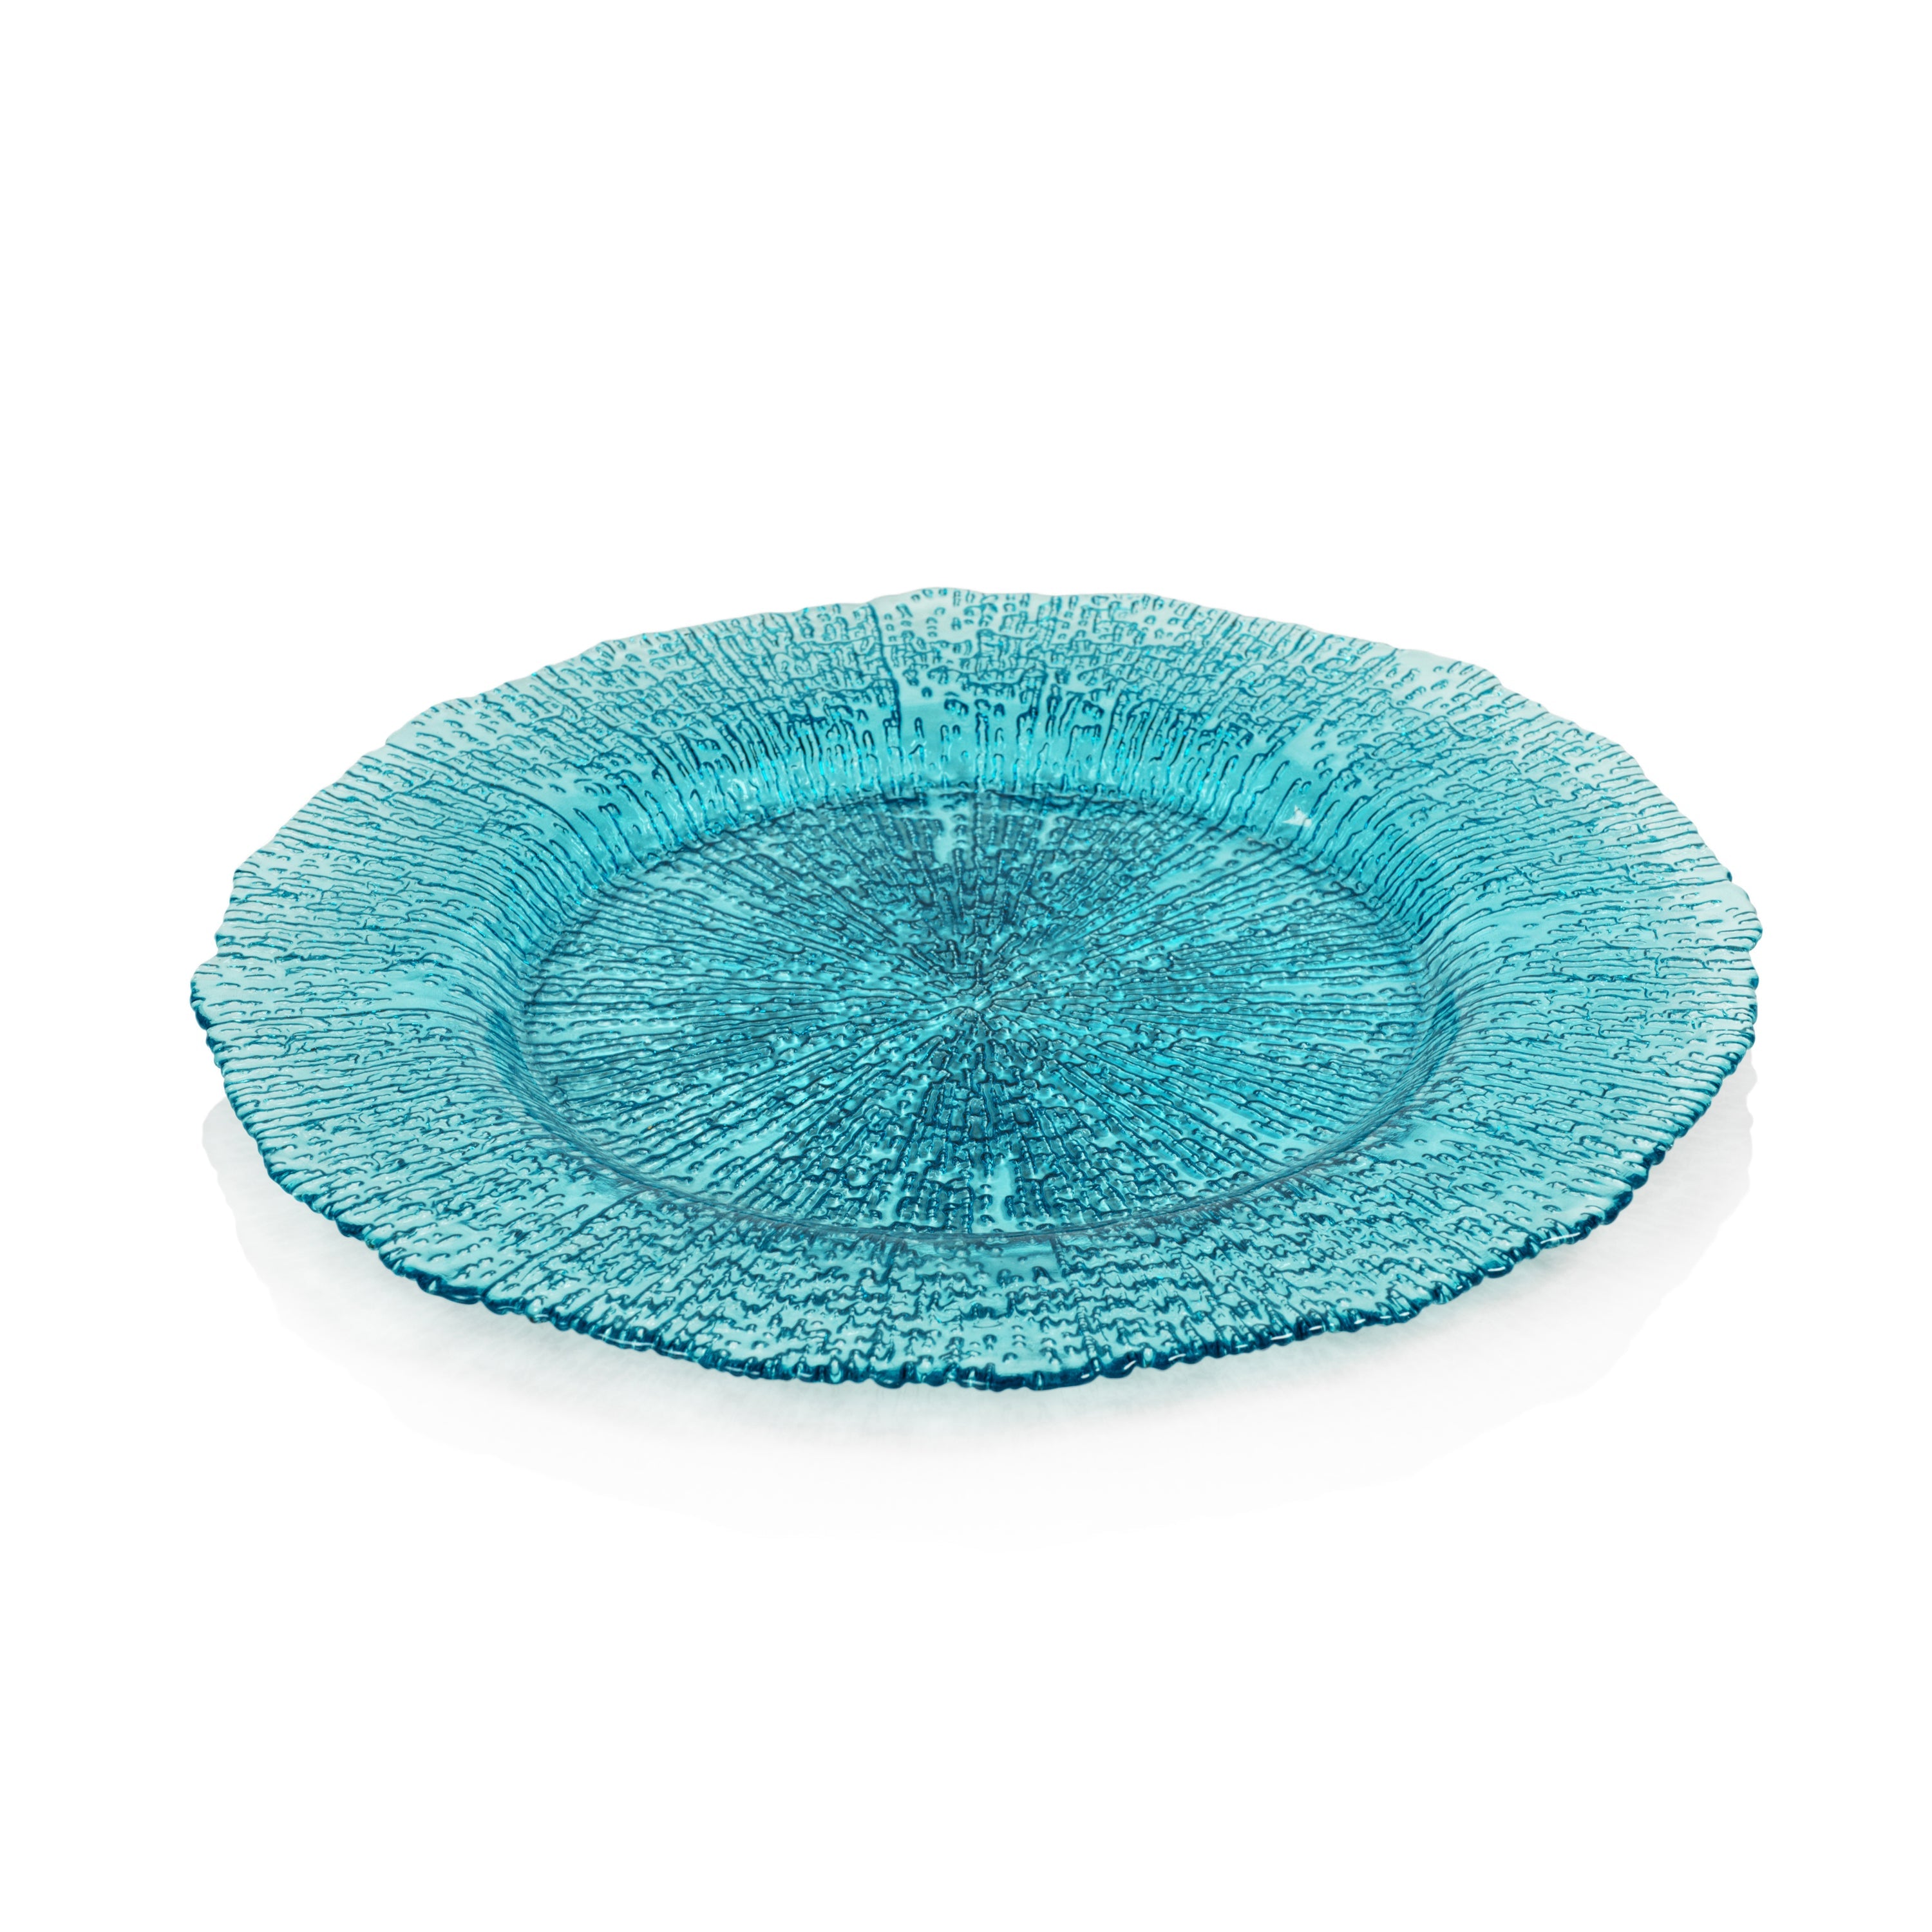 Zodax Azur Alabaster Glass Bowl - Large